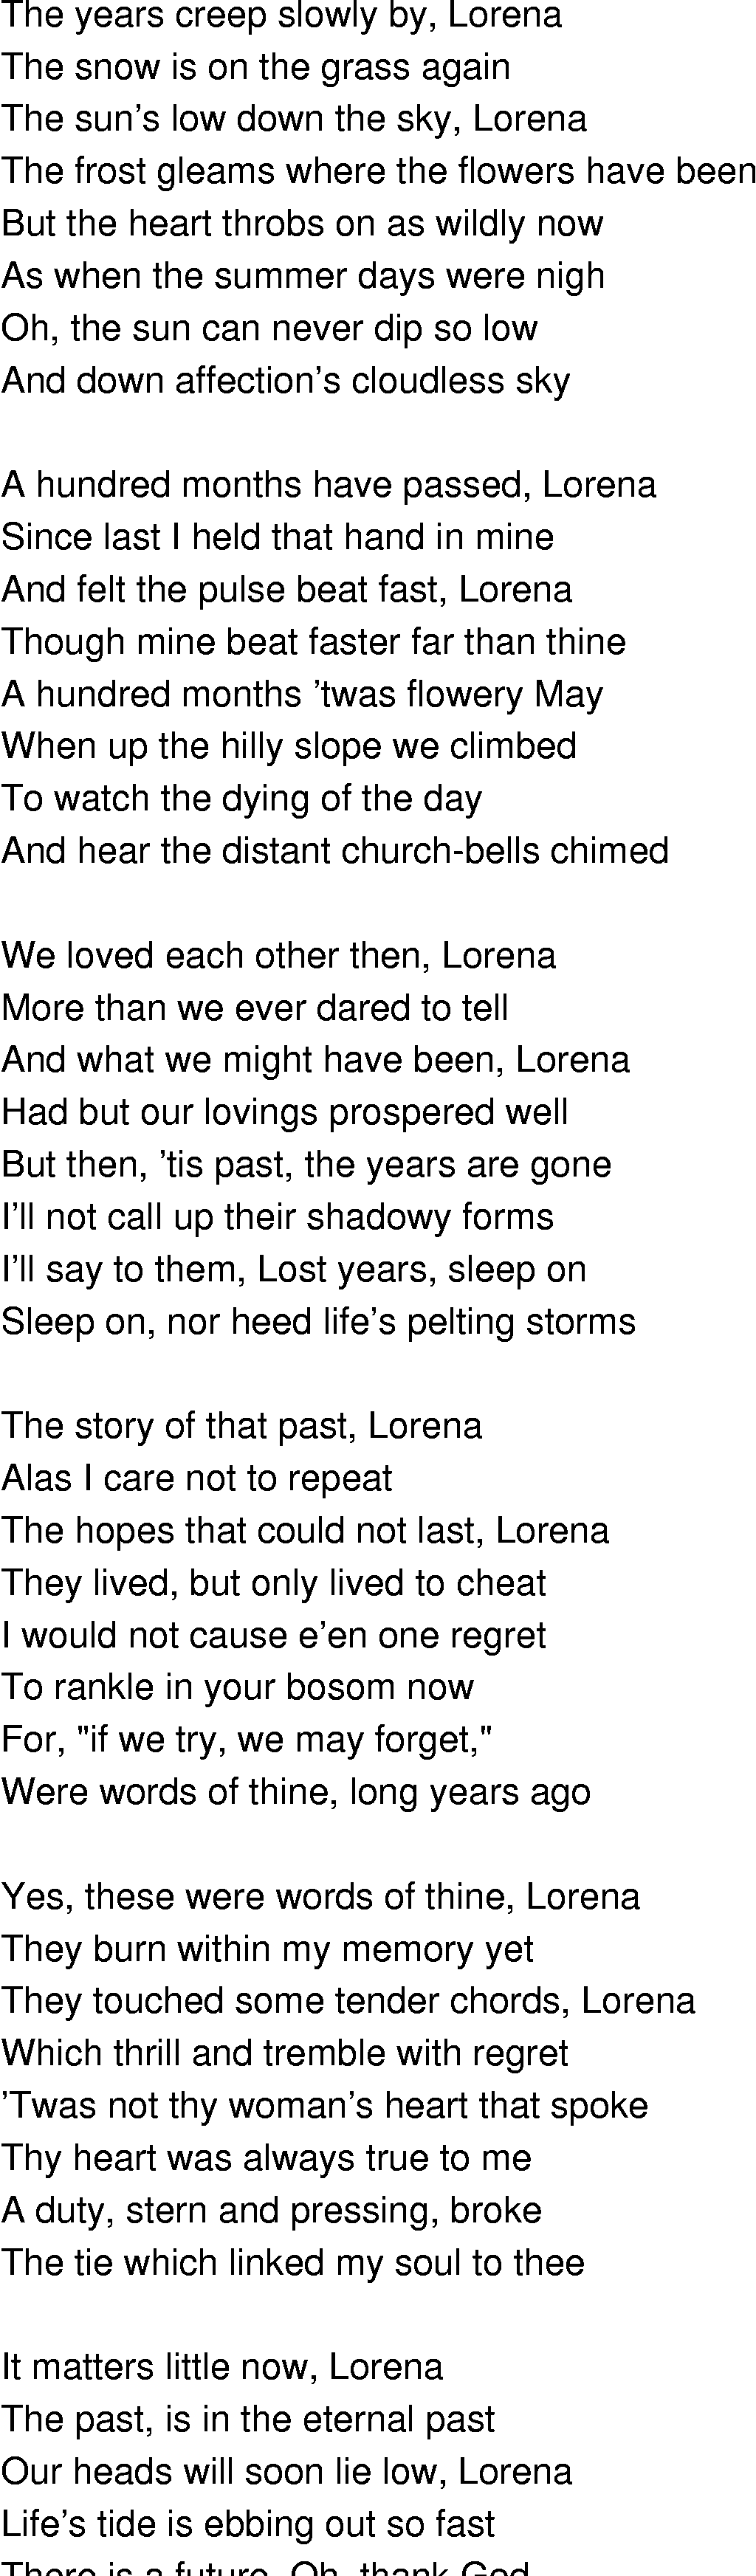 Old-Time (oldtimey) Song Lyrics - lorena